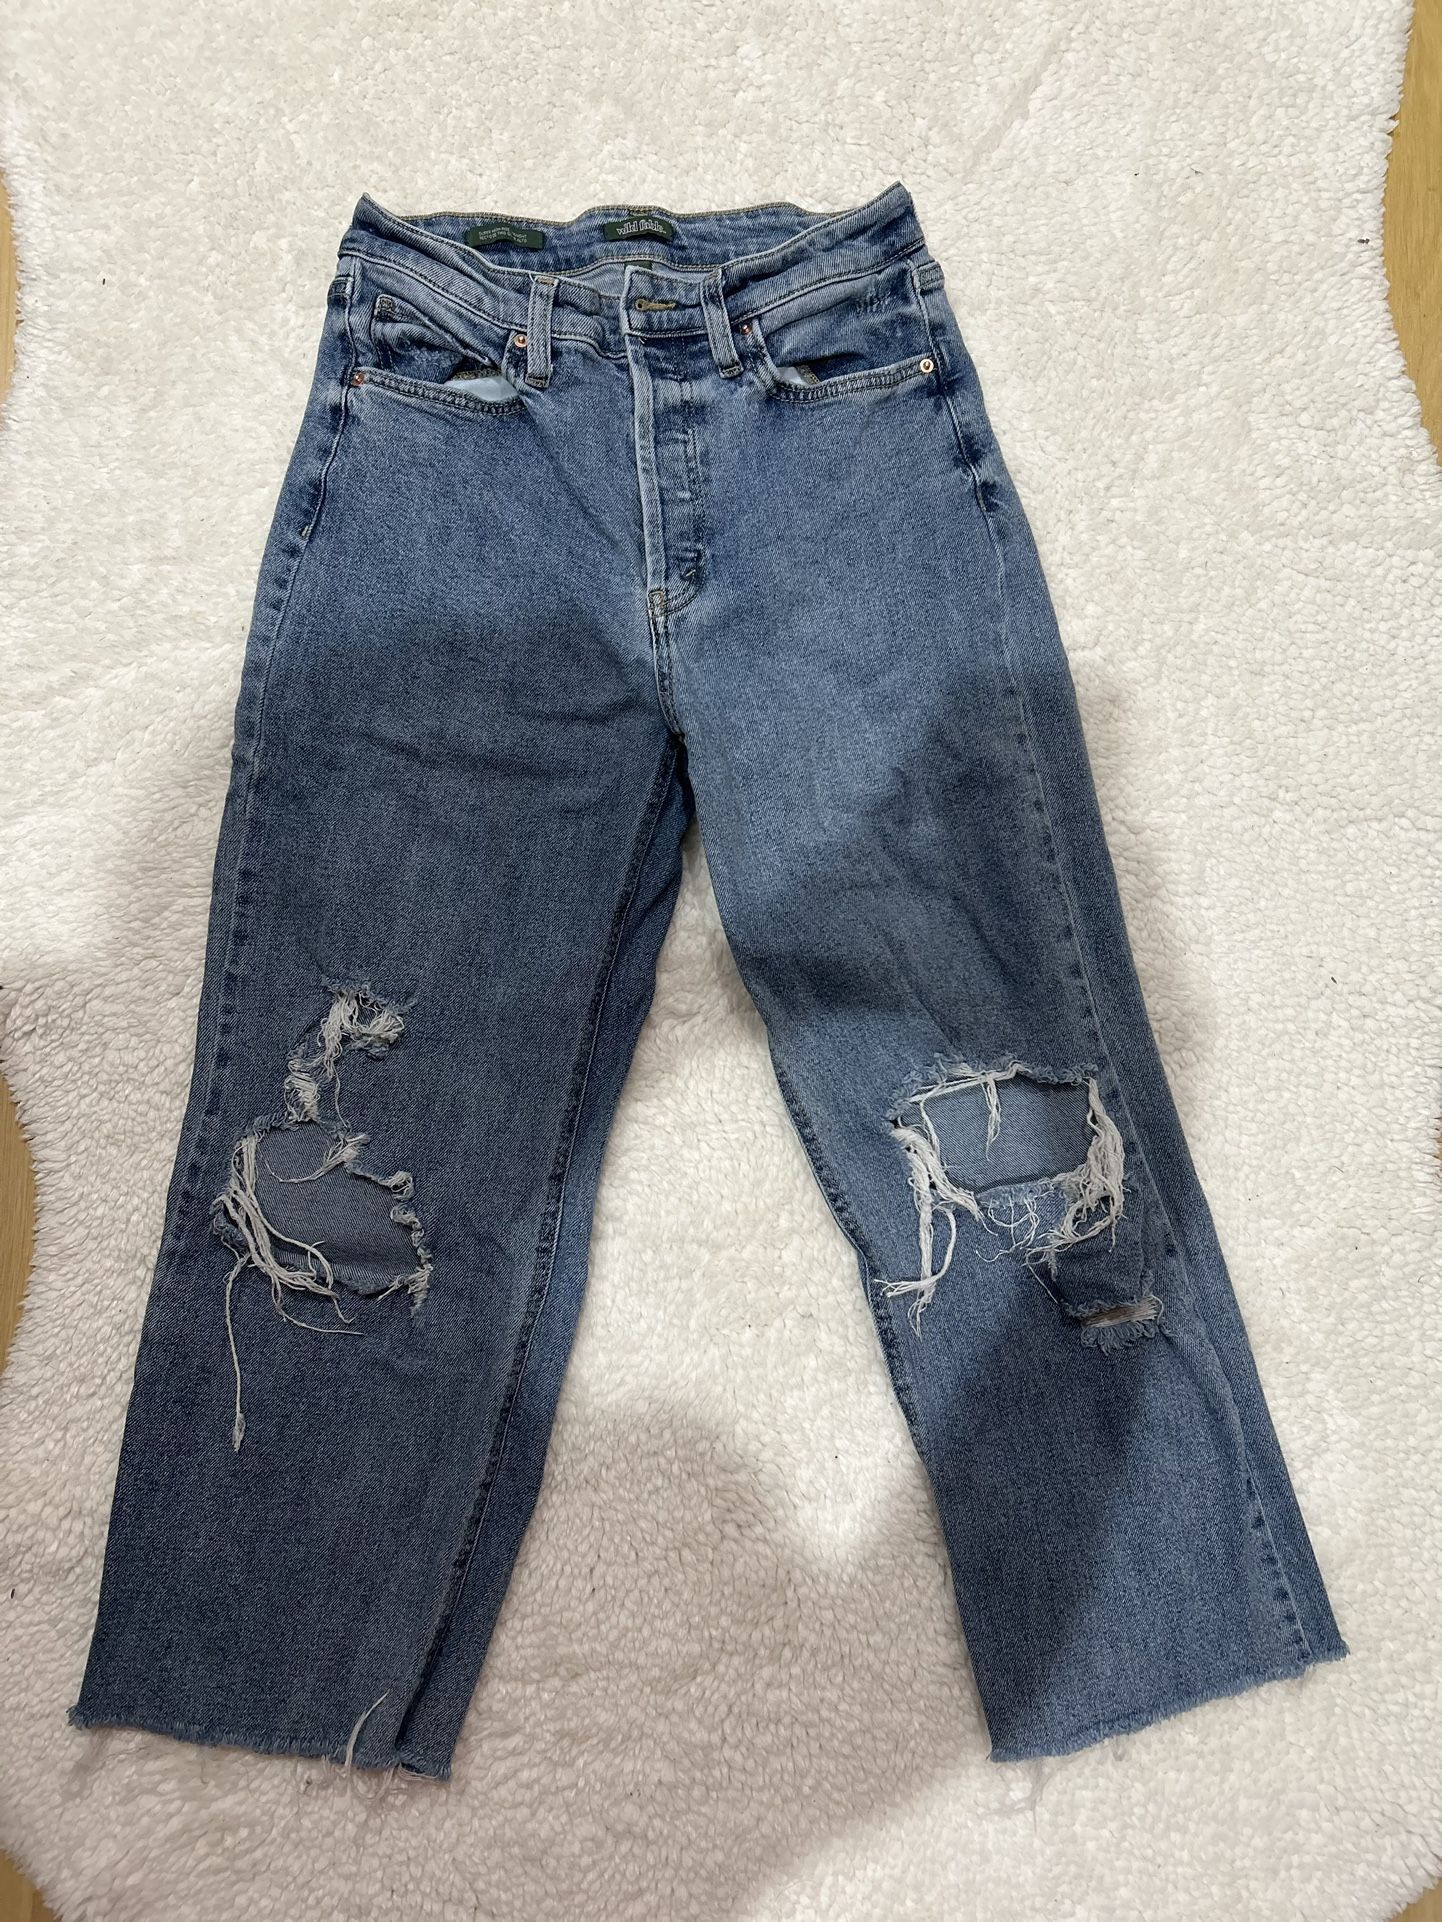 Ripped Denim Jeans